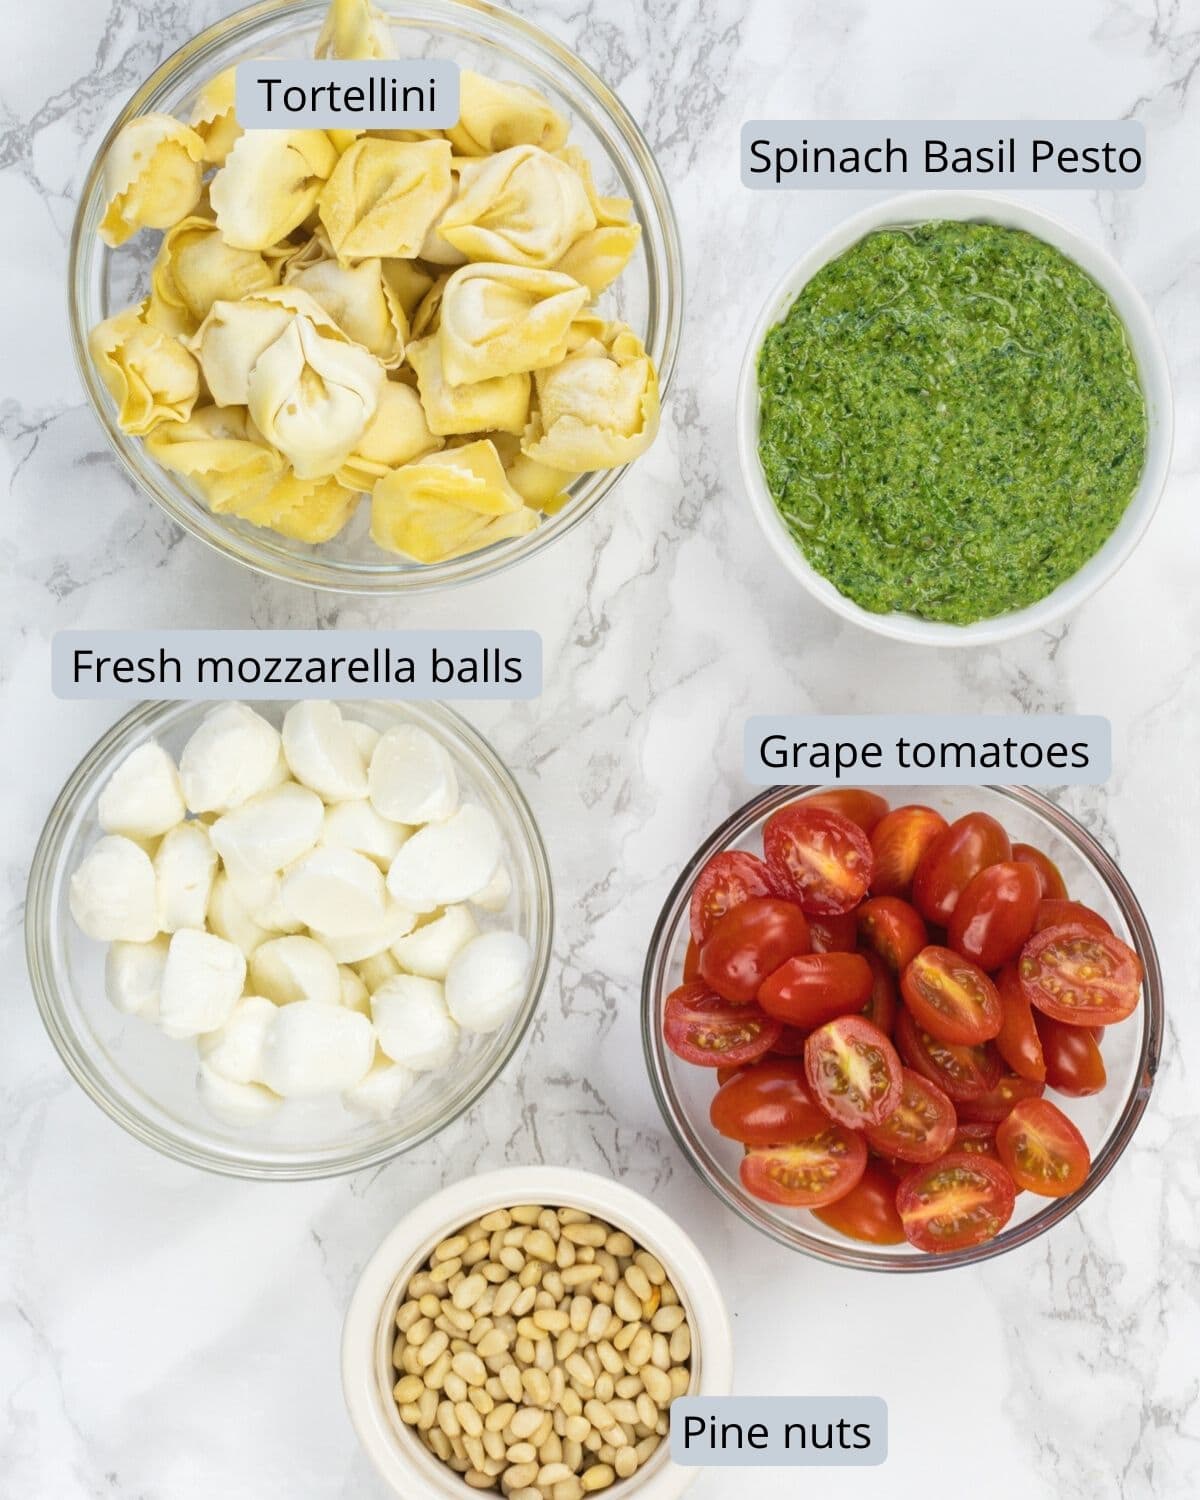 Pesto tortellini salad ingredients with labels